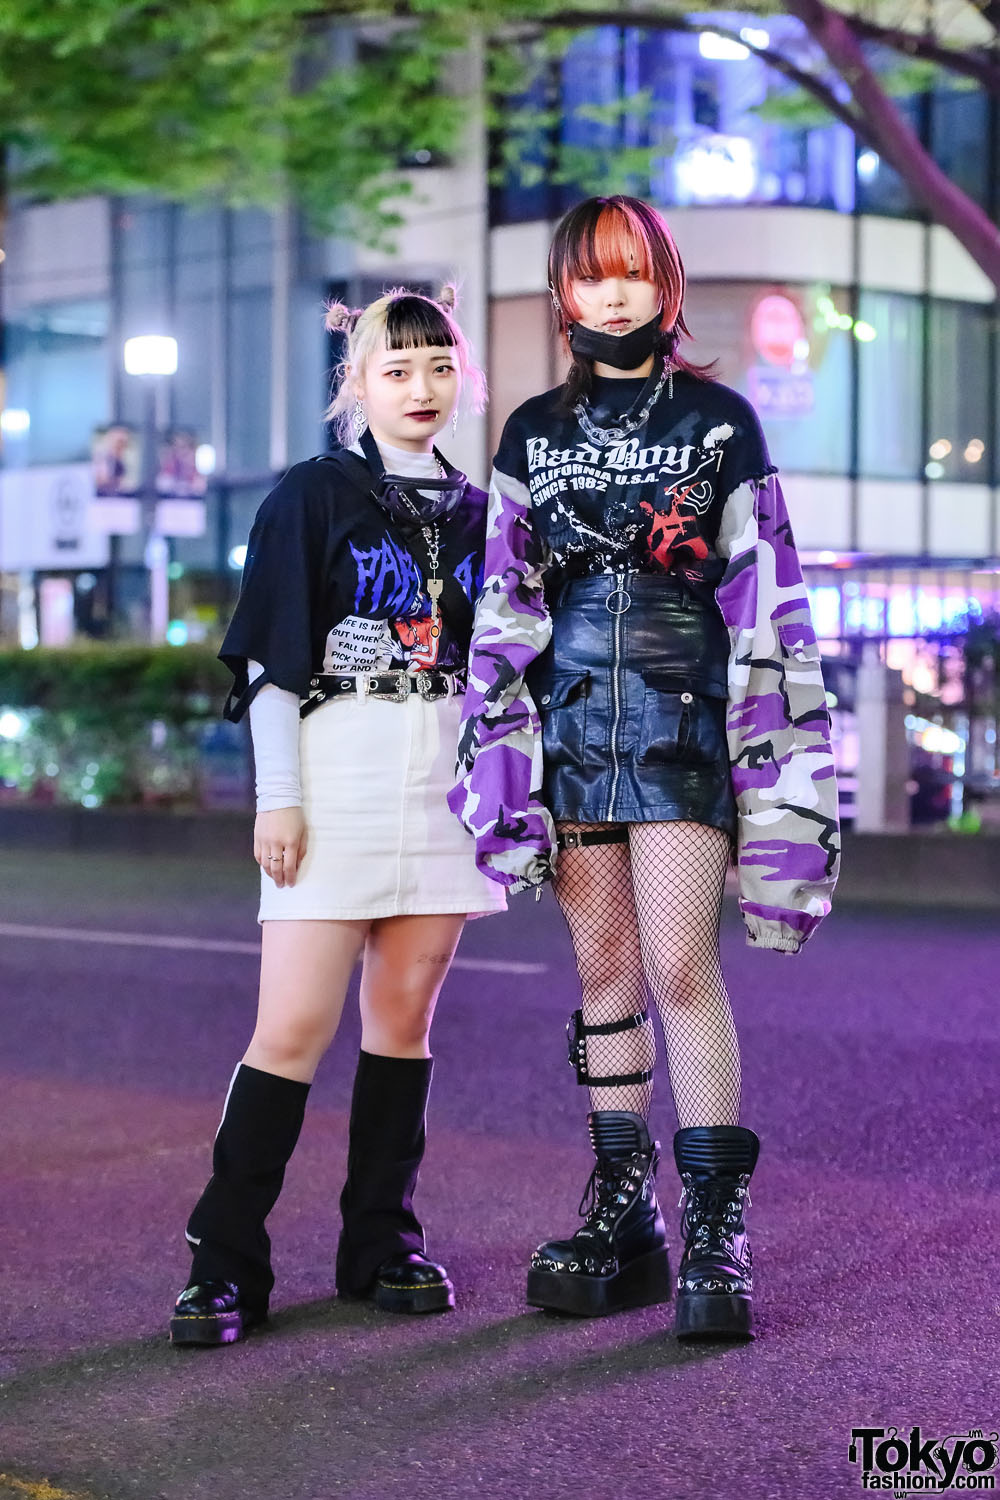 Harajuku Girls in Dark Looks w/ Extra Long Sleeves, Giant Zipper, Never Mind The XU, Remake Fashion & Demonia Platforms